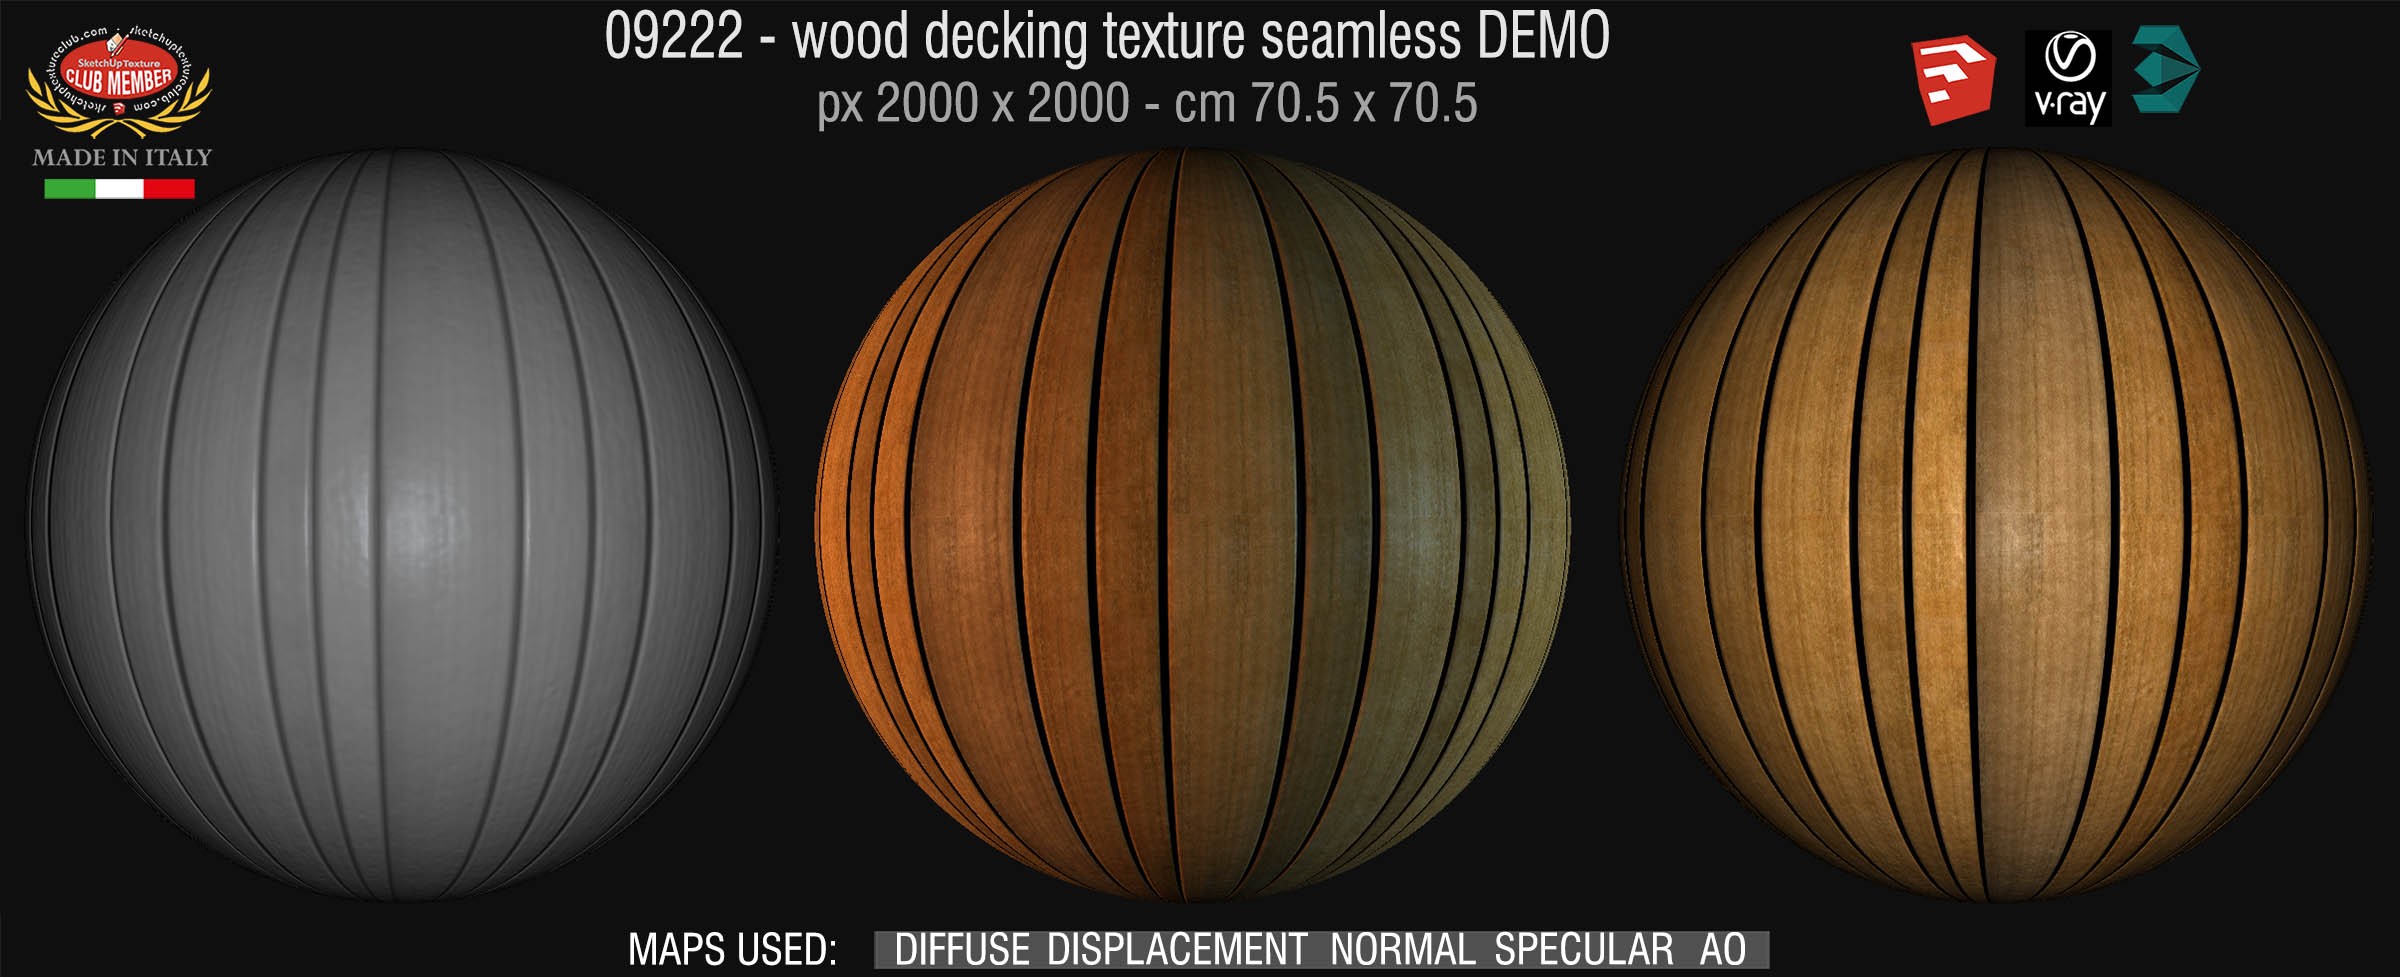 Wood decking texture seamless 09222